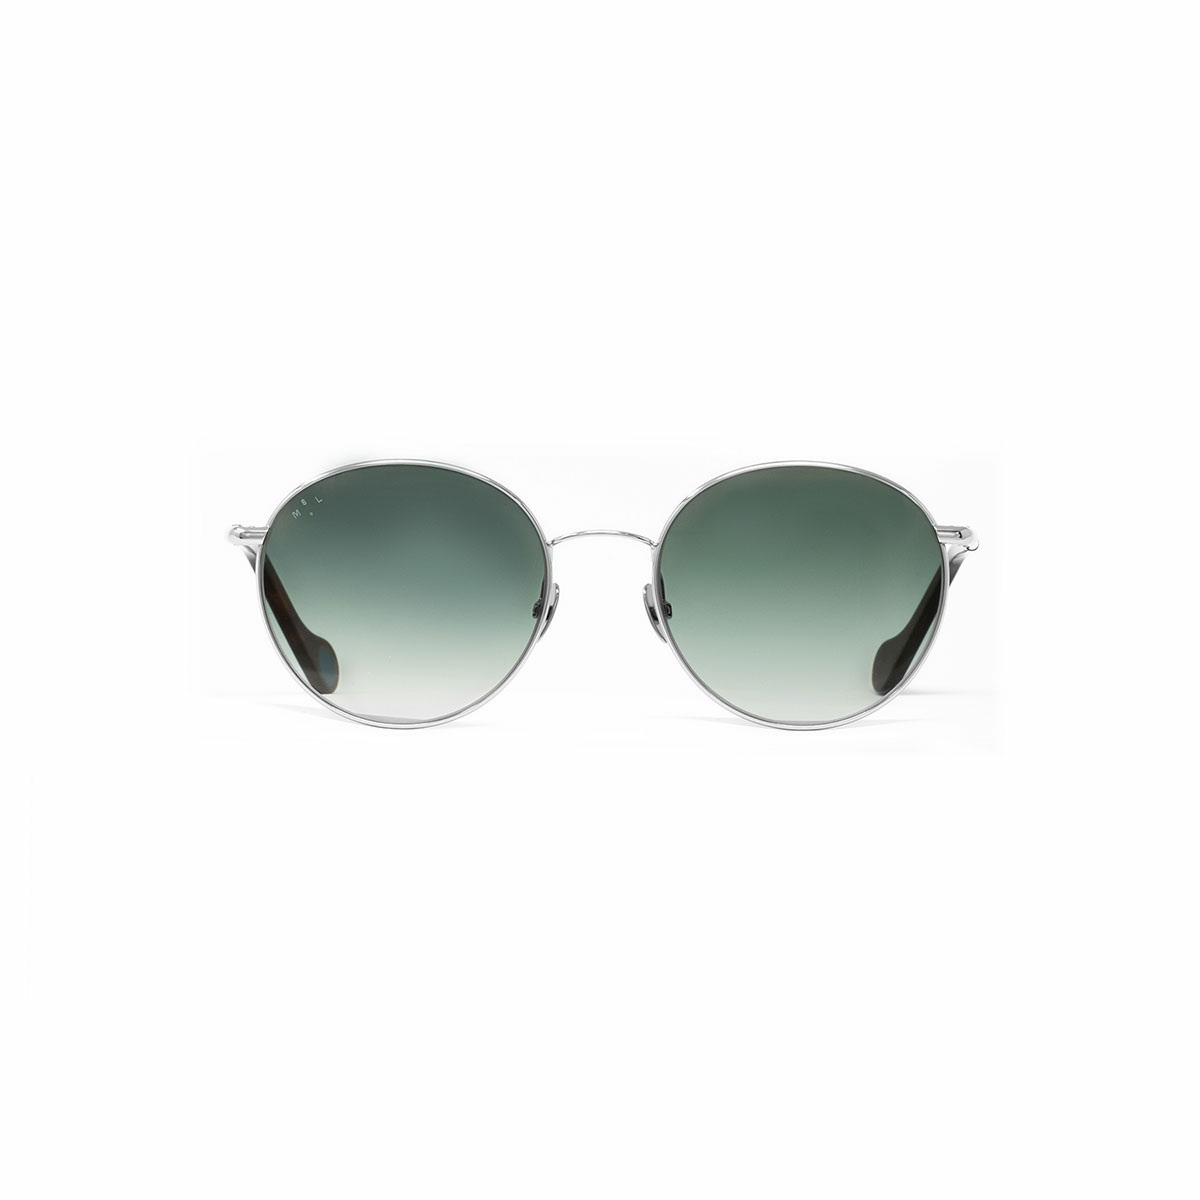 Sunglasses Jane, Gradient green - Size 53-20 - Steel - image 1